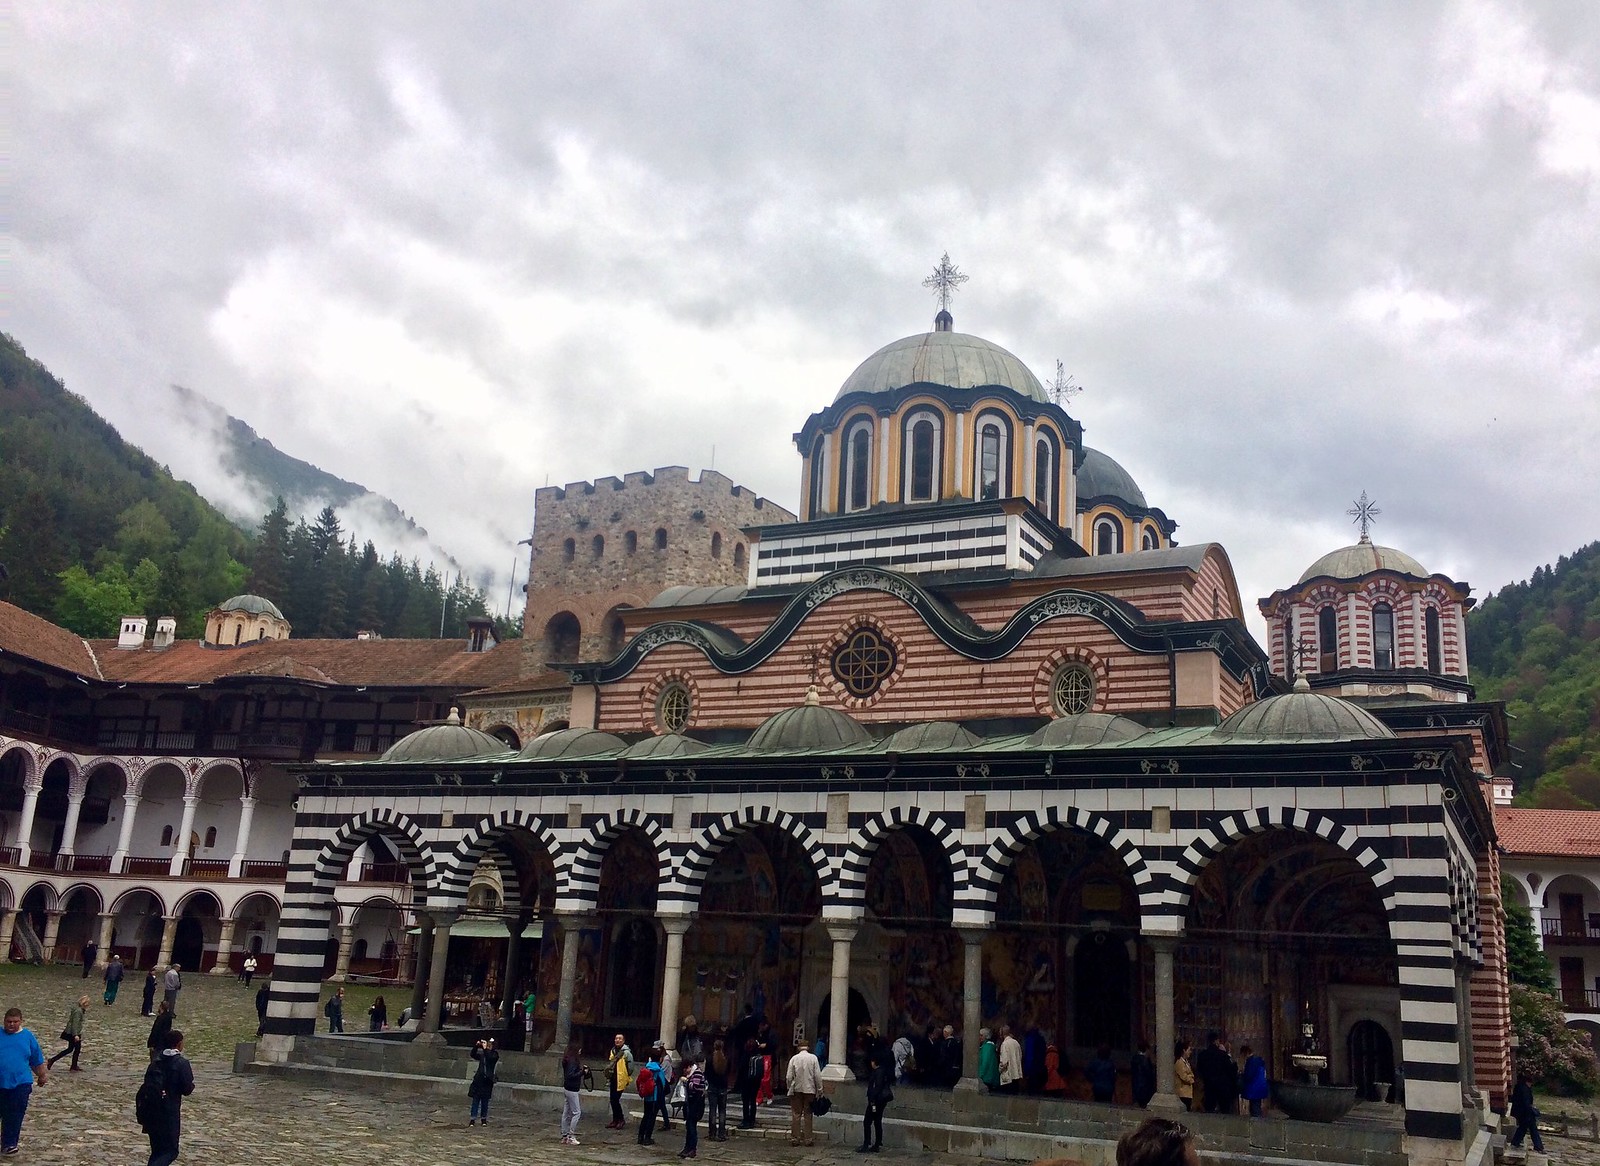 201705 - Balkans - Rila Monastery Church - 44 of 101 - Rila Monastery - Rilski manastir, May 26, 2017